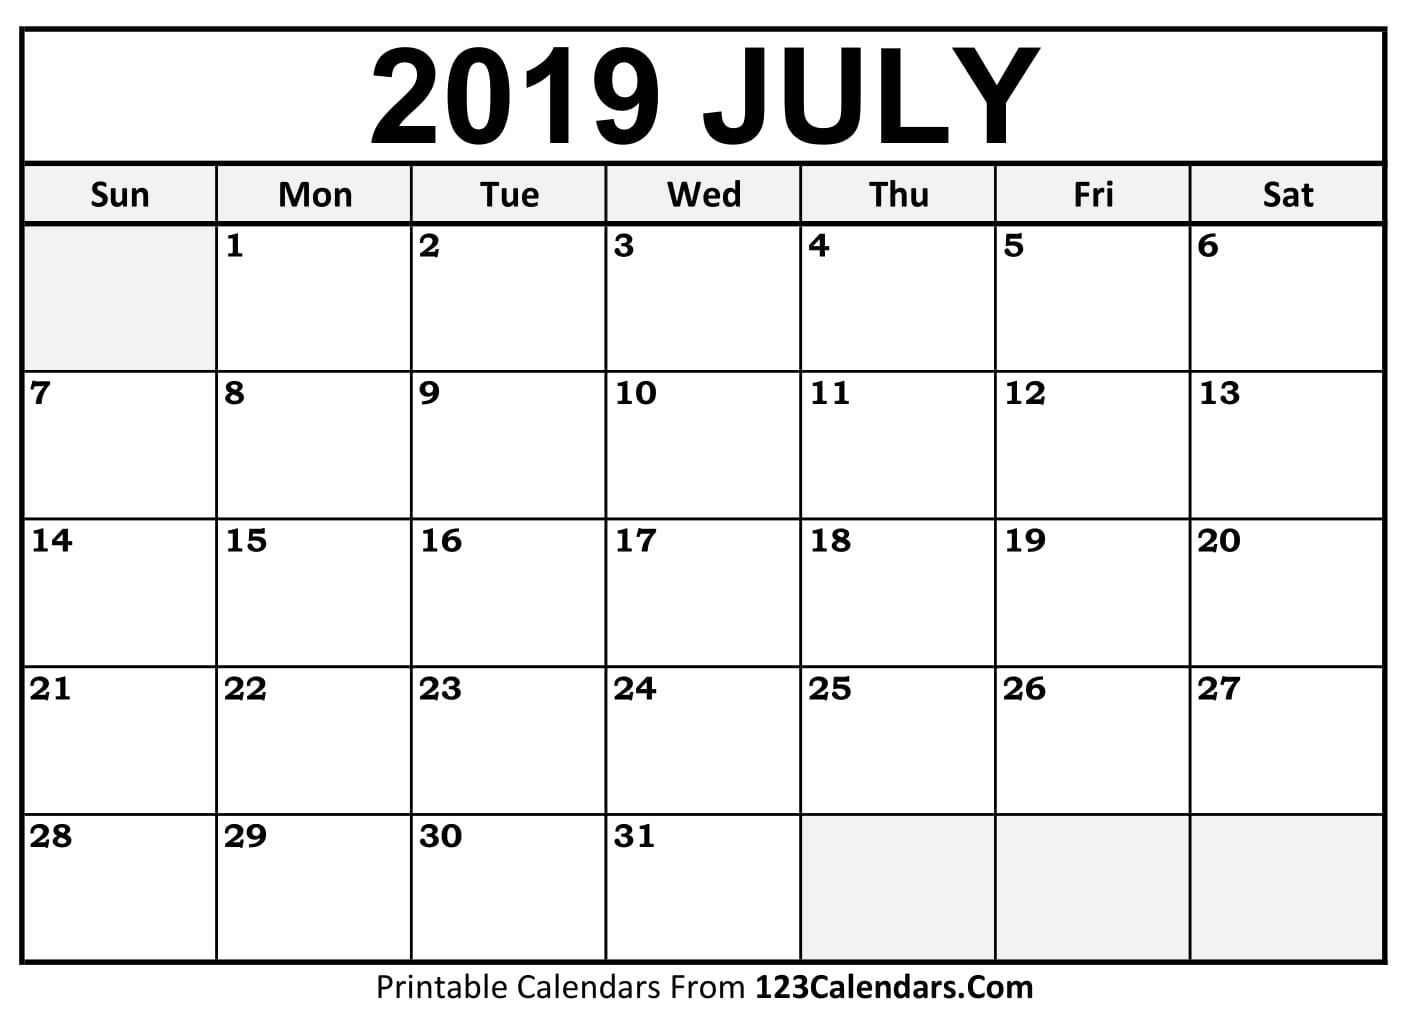 july-2019-calendar-blank-easily-printable-123calendars